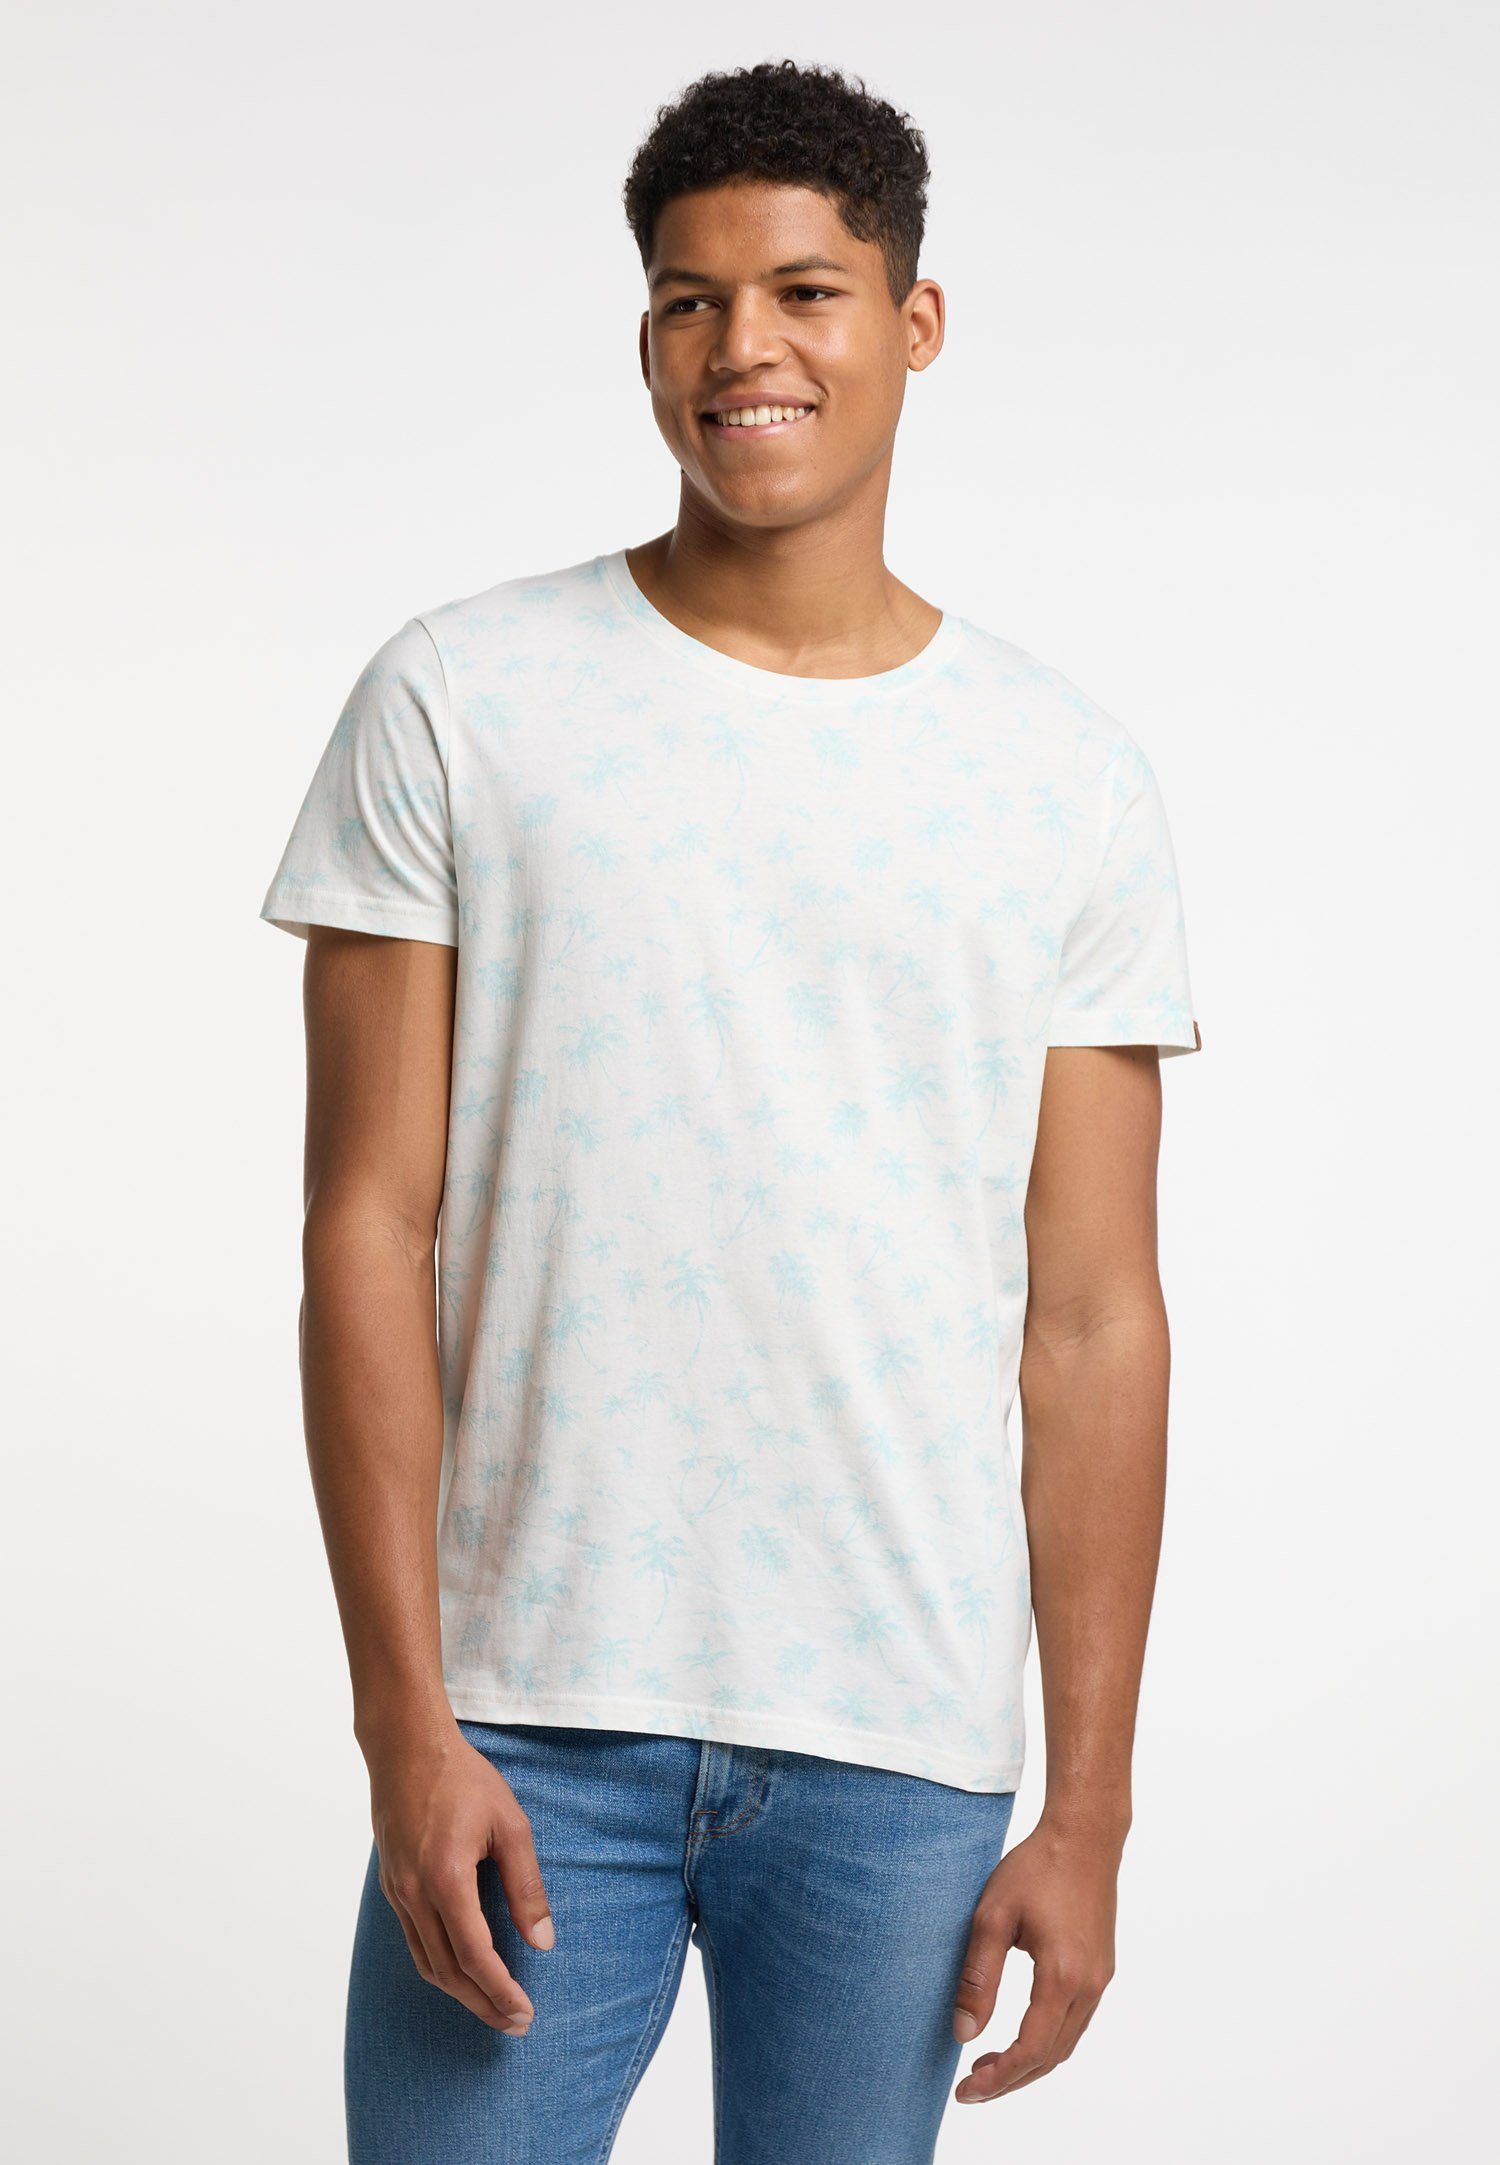 T-Shirt Mode Vegane WHITE & 7000 WANNO Nachhaltige Ragwear